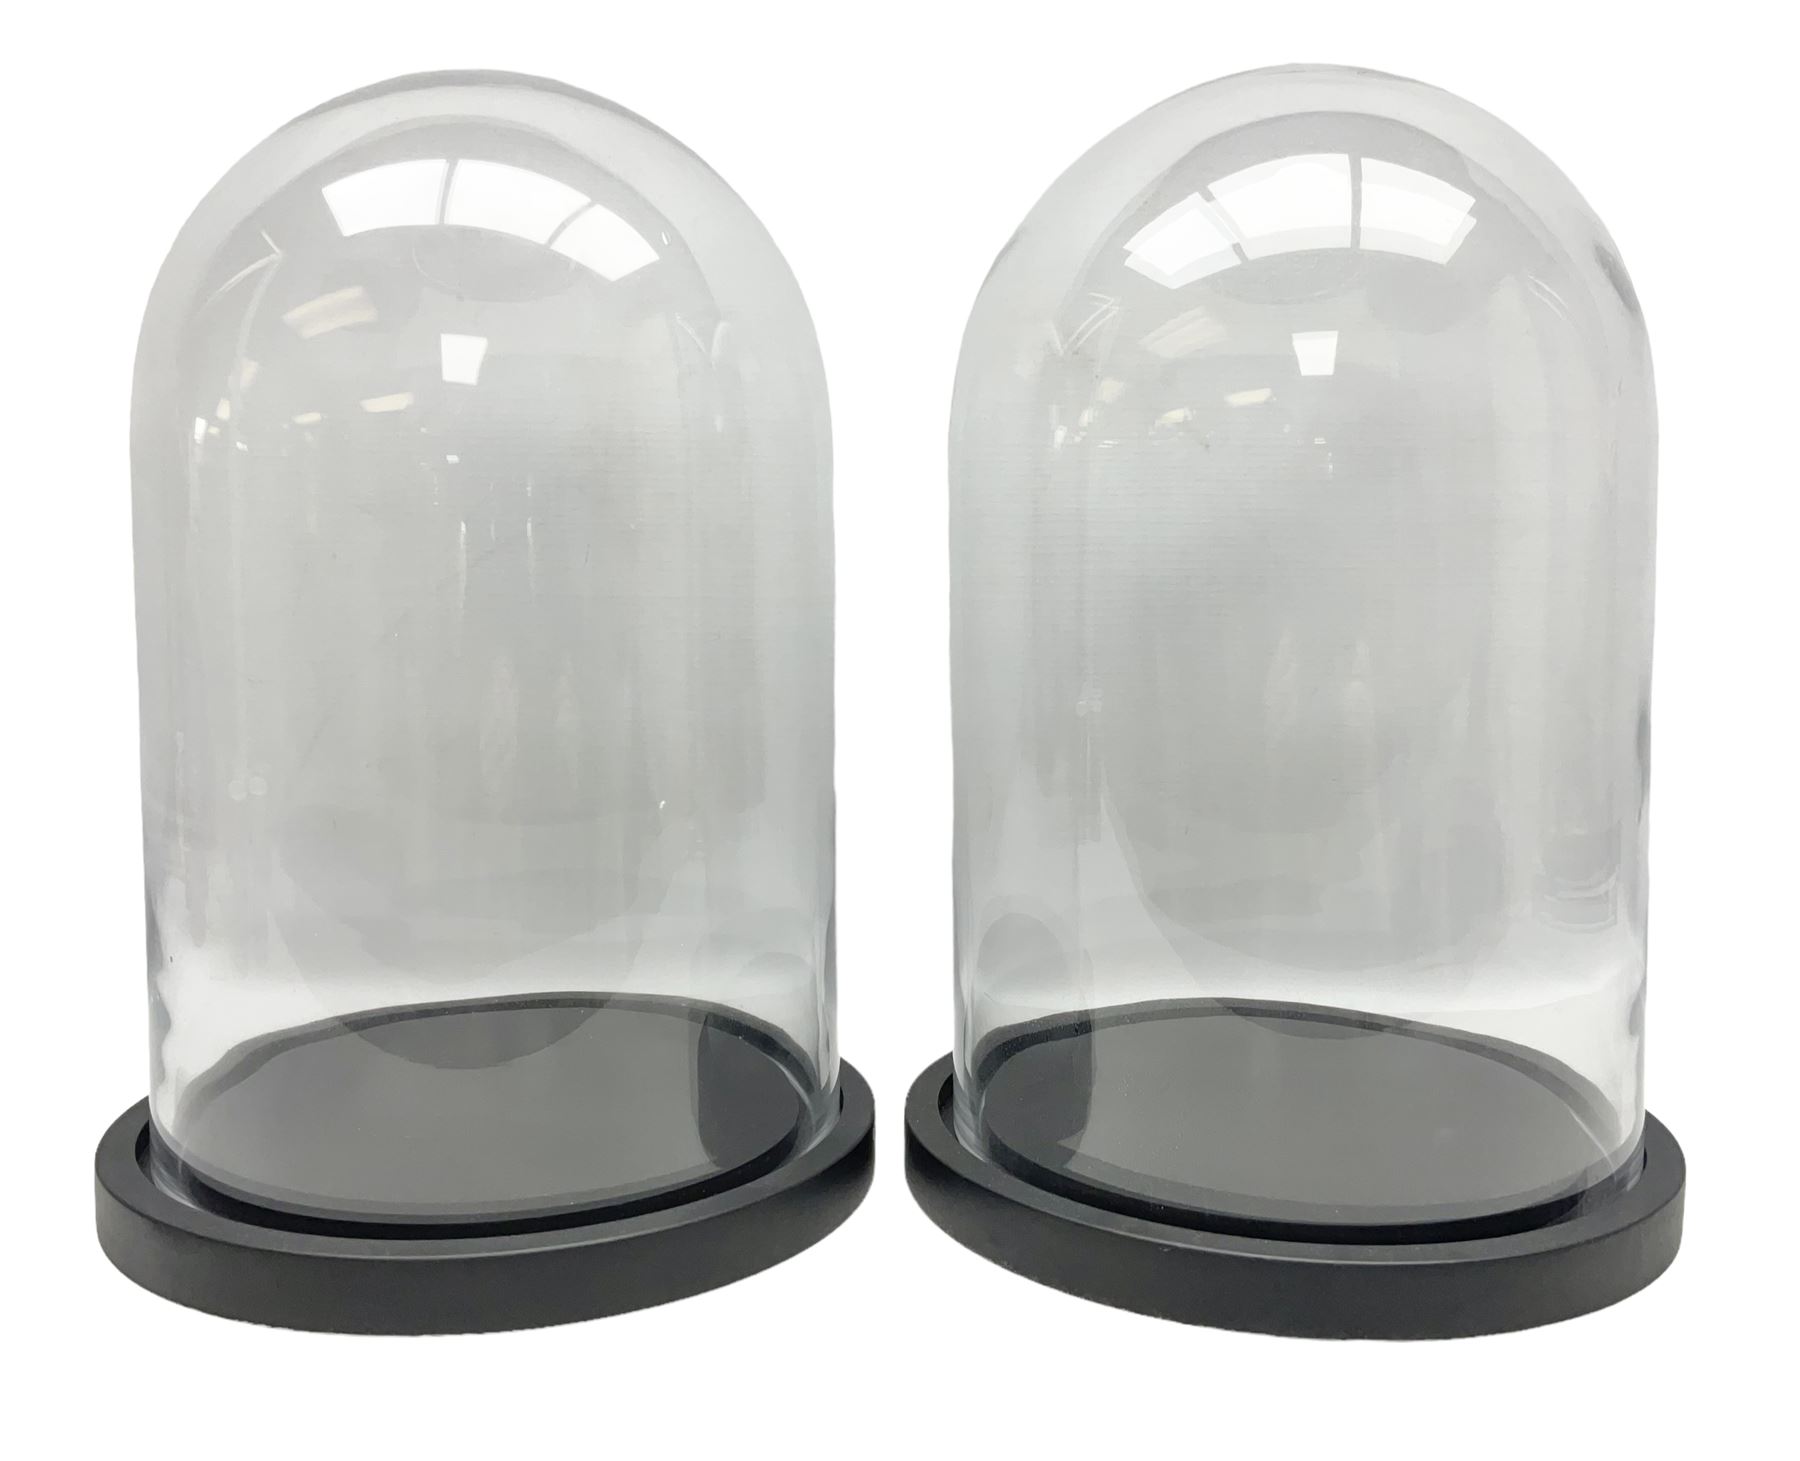 Pair of glass domes upon circular bases